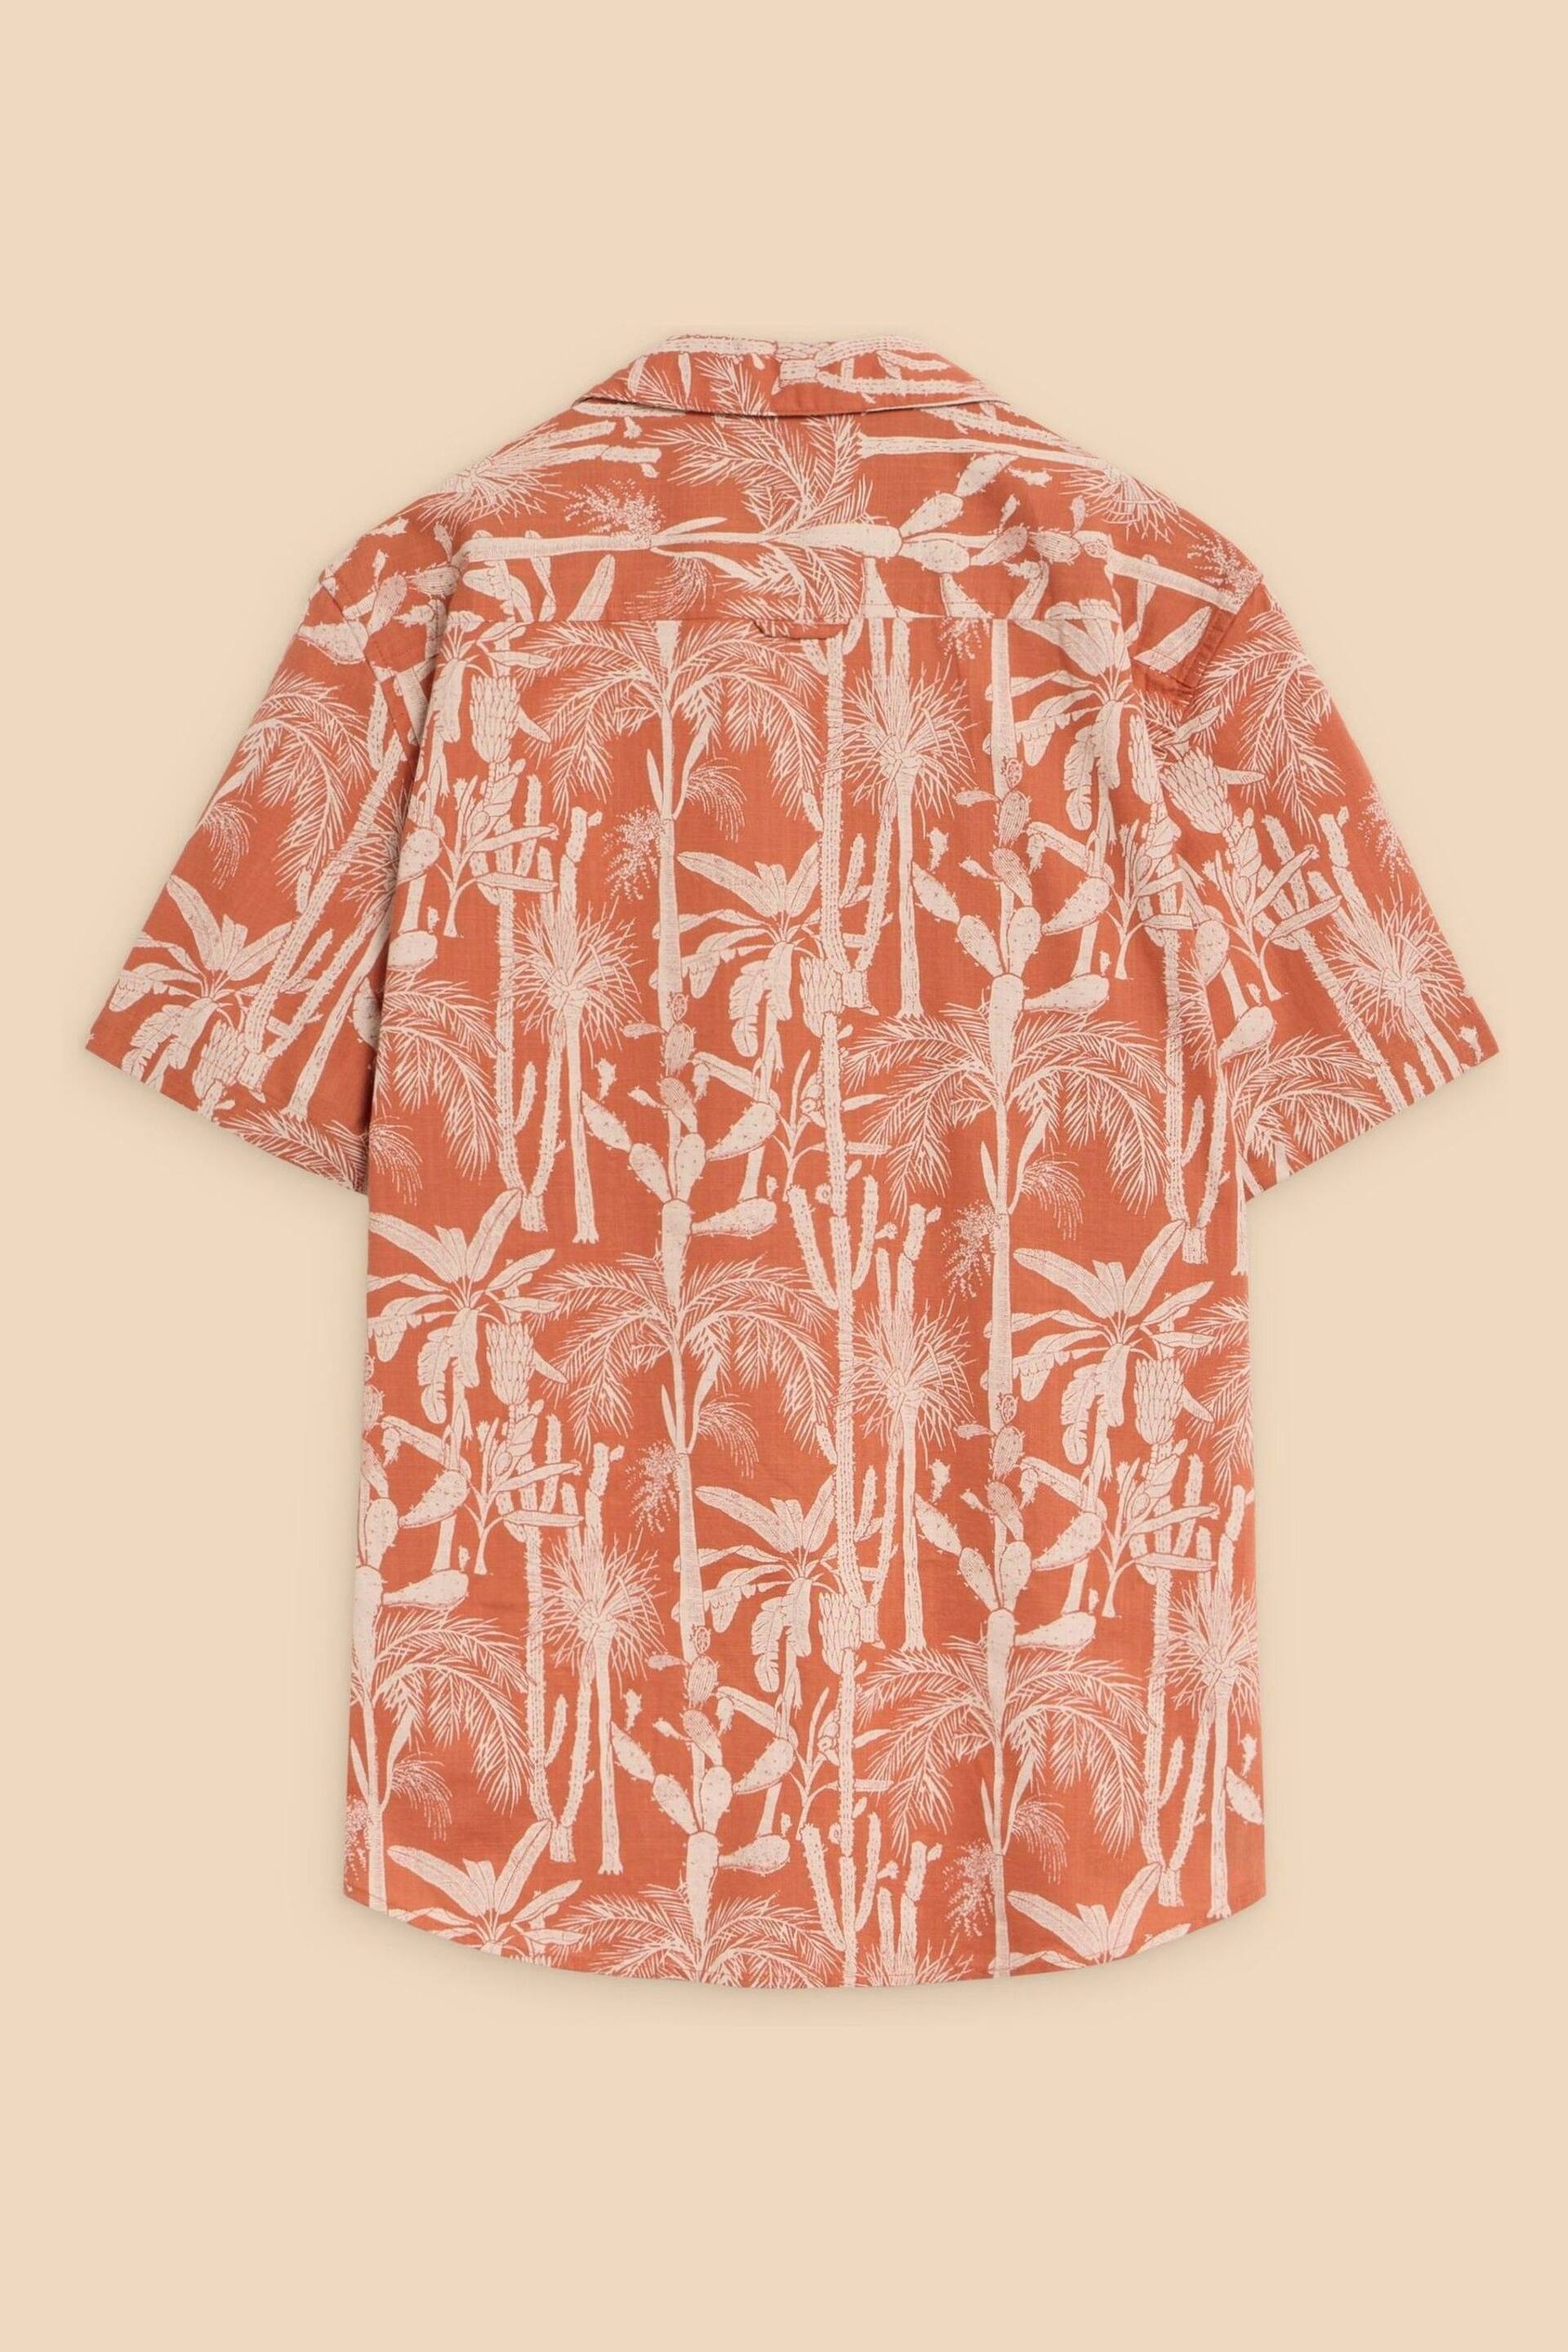 White Stuff Orange Cactus Printed Shirt - Image 6 of 7